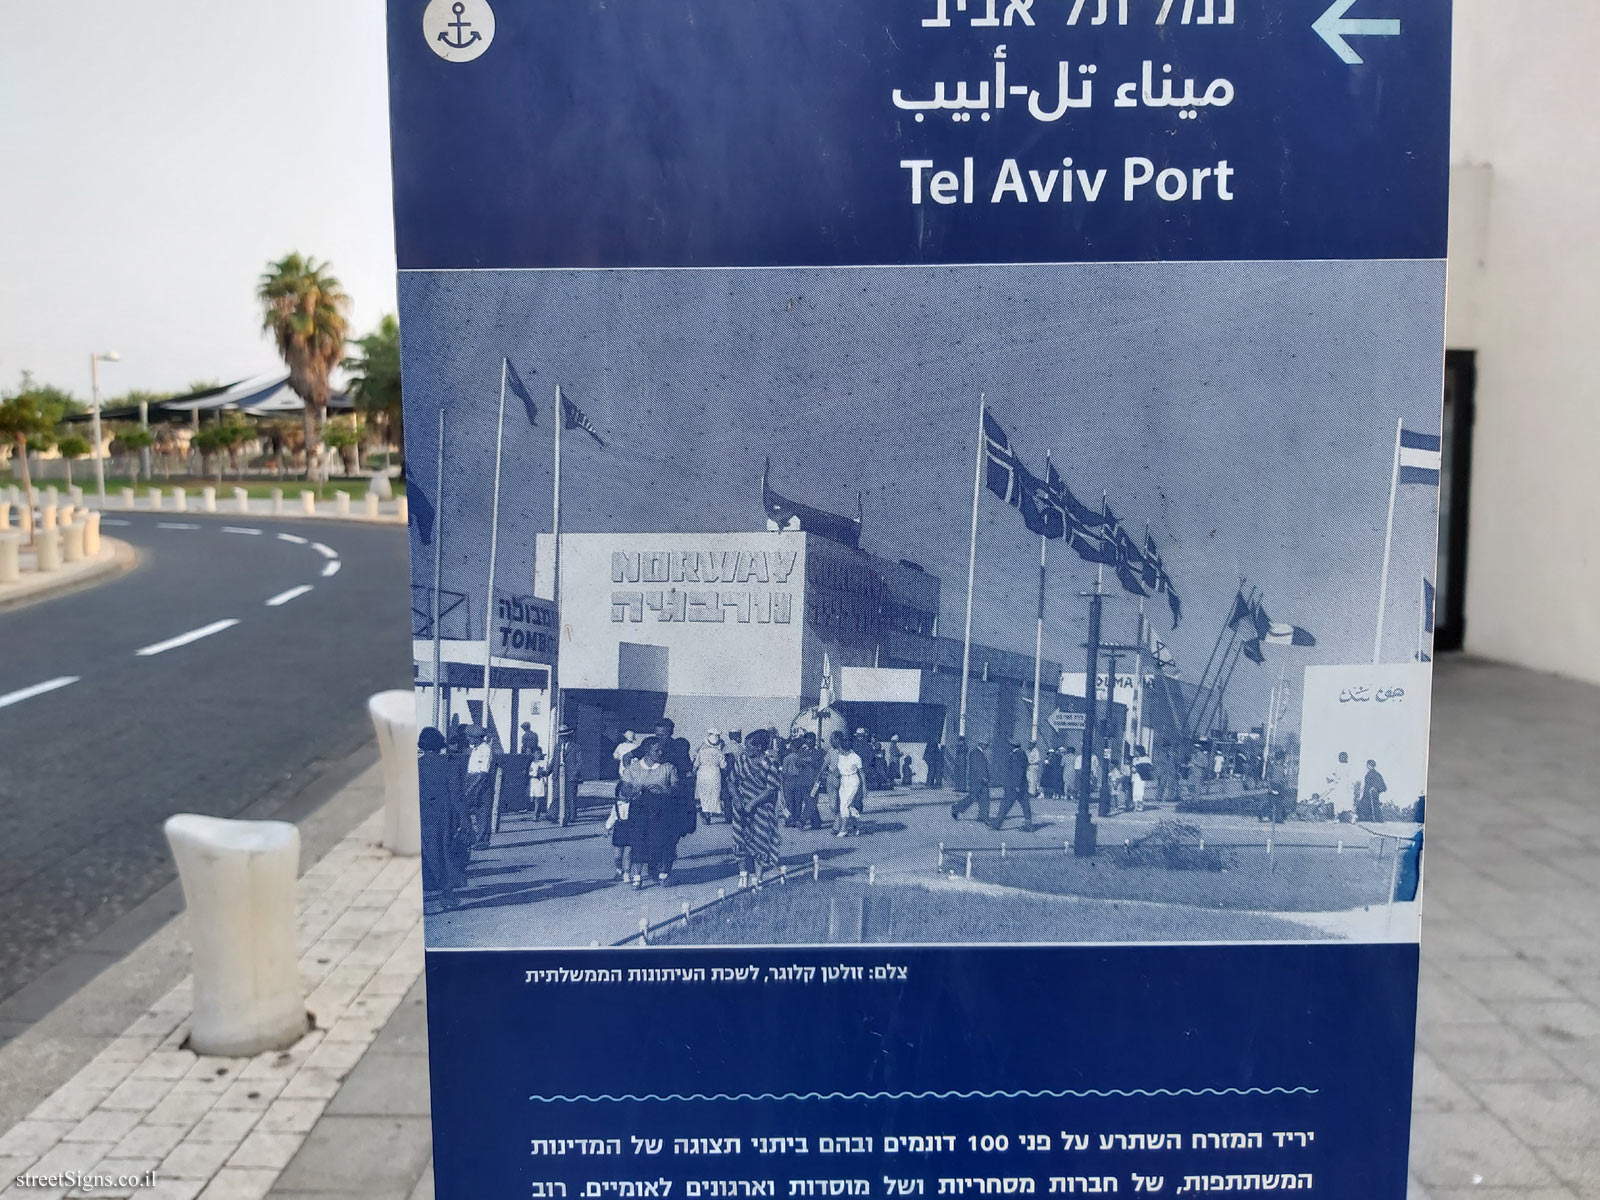 Tel Aviv - Levant Fair - About the Fair